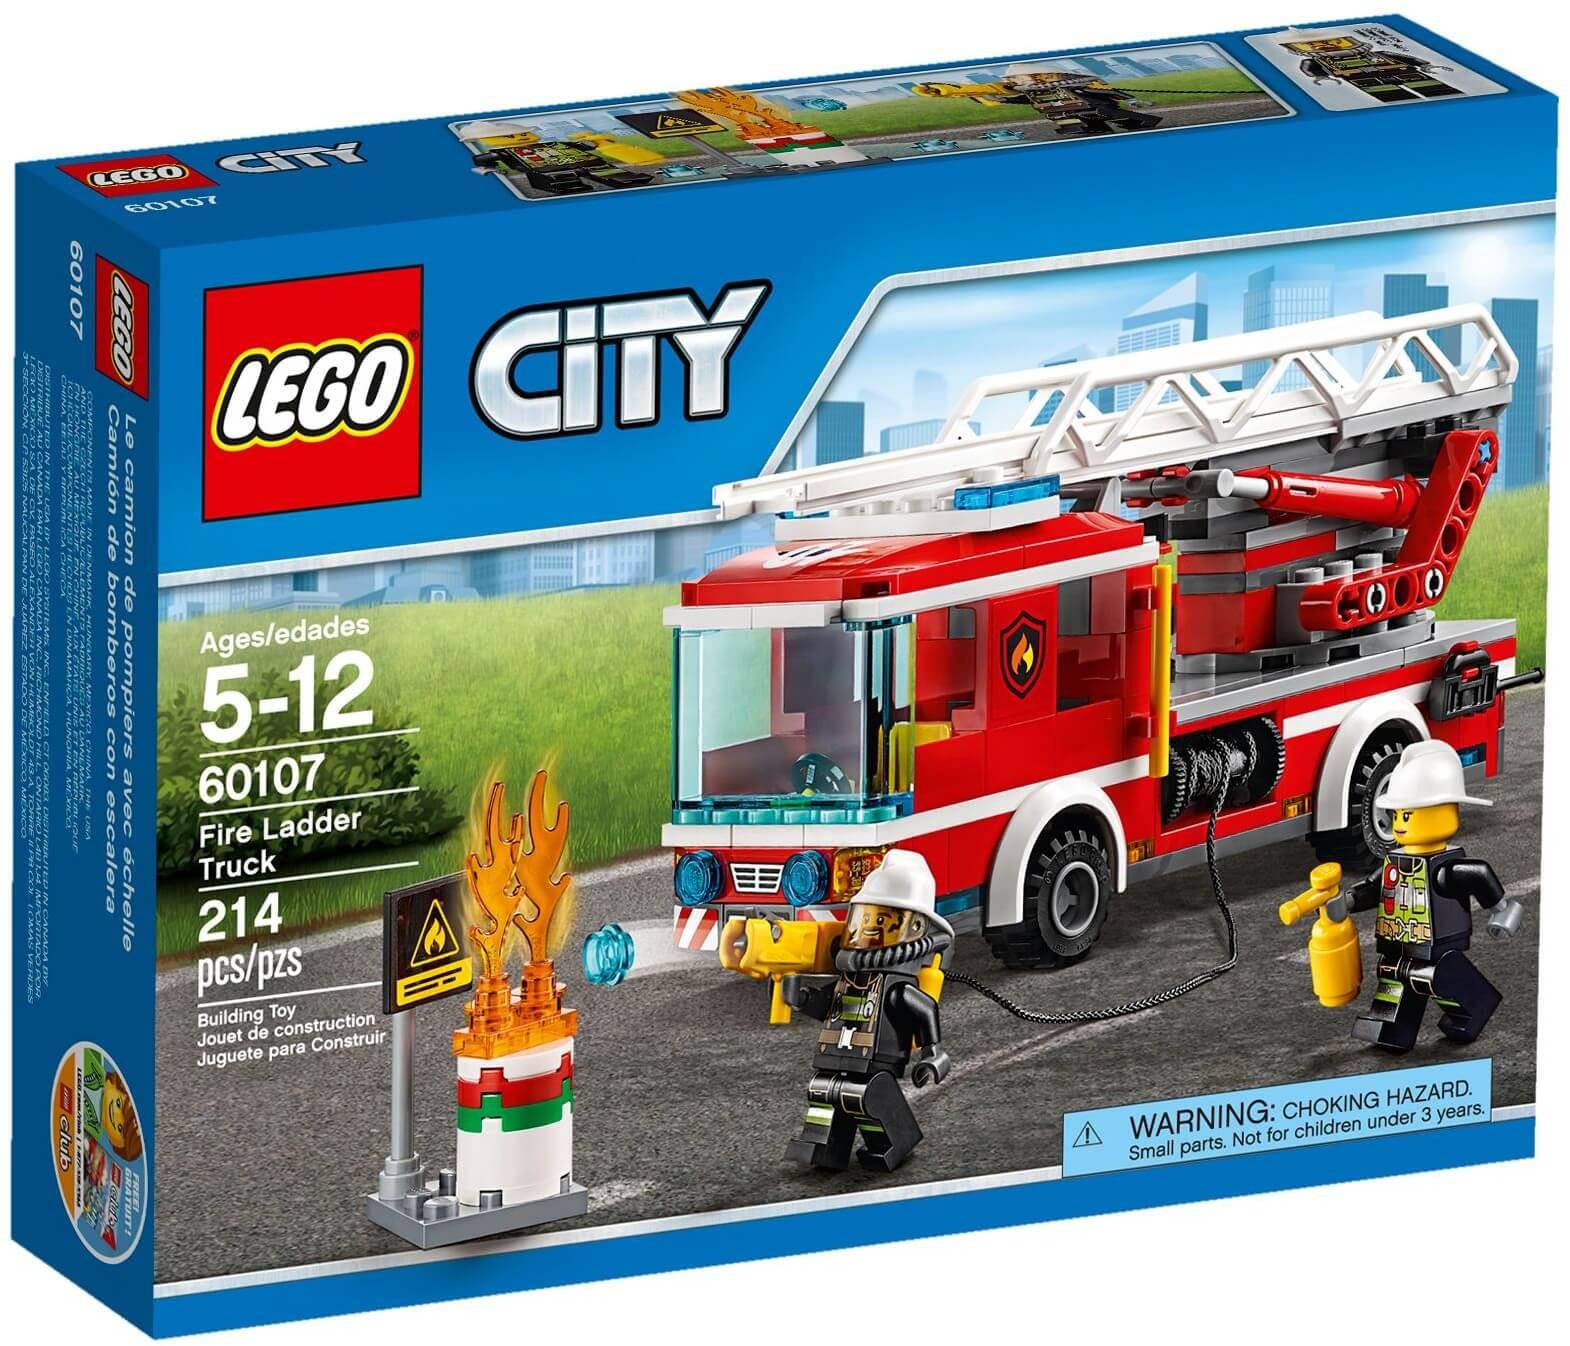 Mua đồ chơi LEGO City 60107 - Xe Tải Cứu Hỏa (LEGO City Fire Ladder Truck 60107)